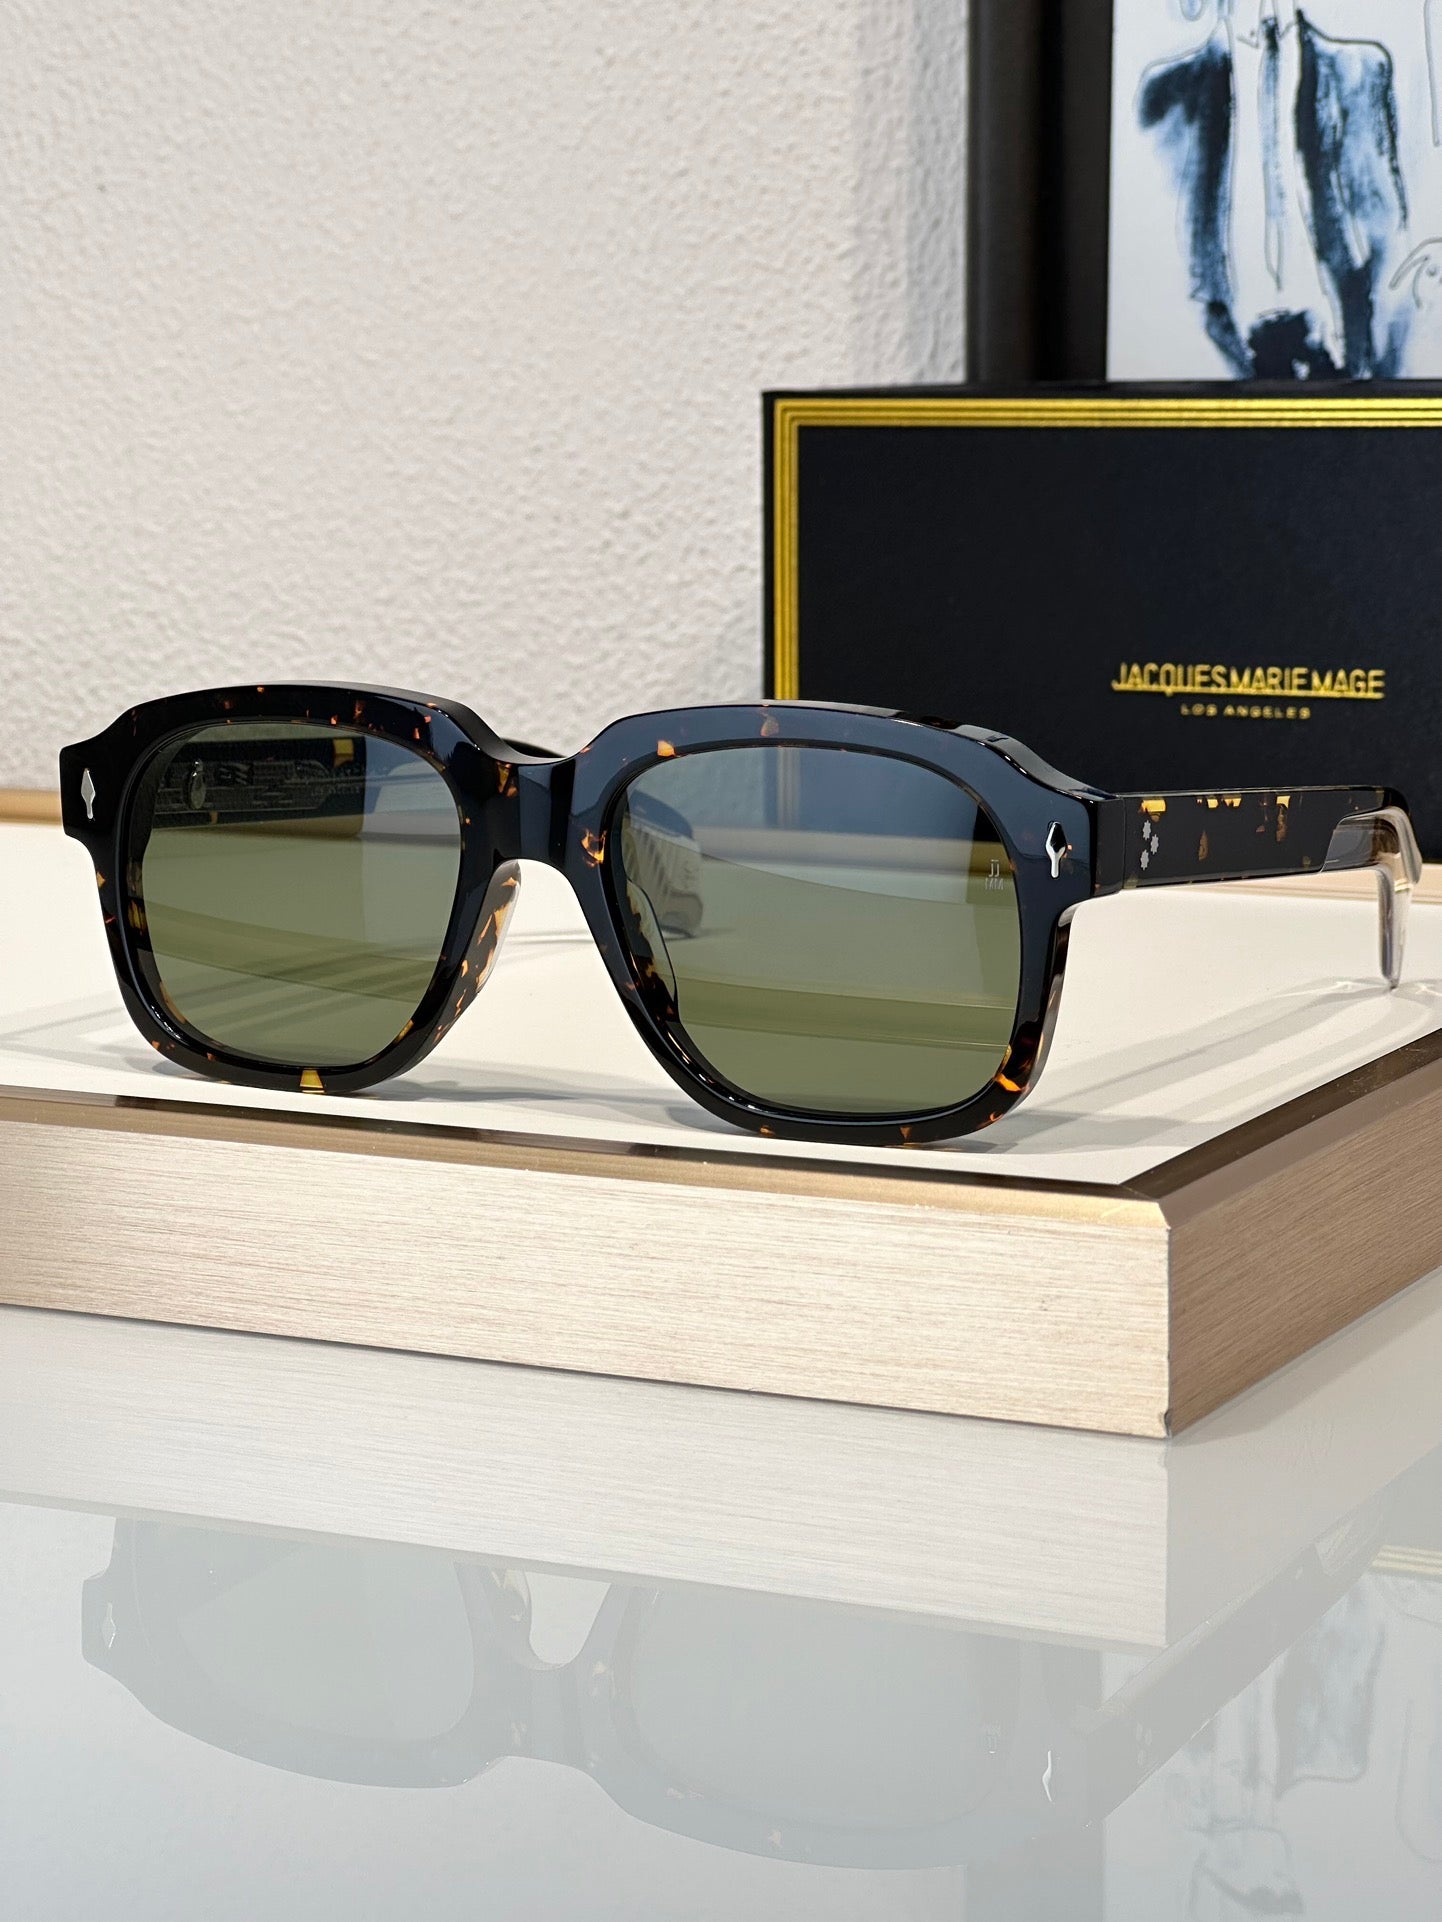 Jacques Marie Mage UNION 52mm Lens Sunglasses ✨$895 - buyonlinebehappy